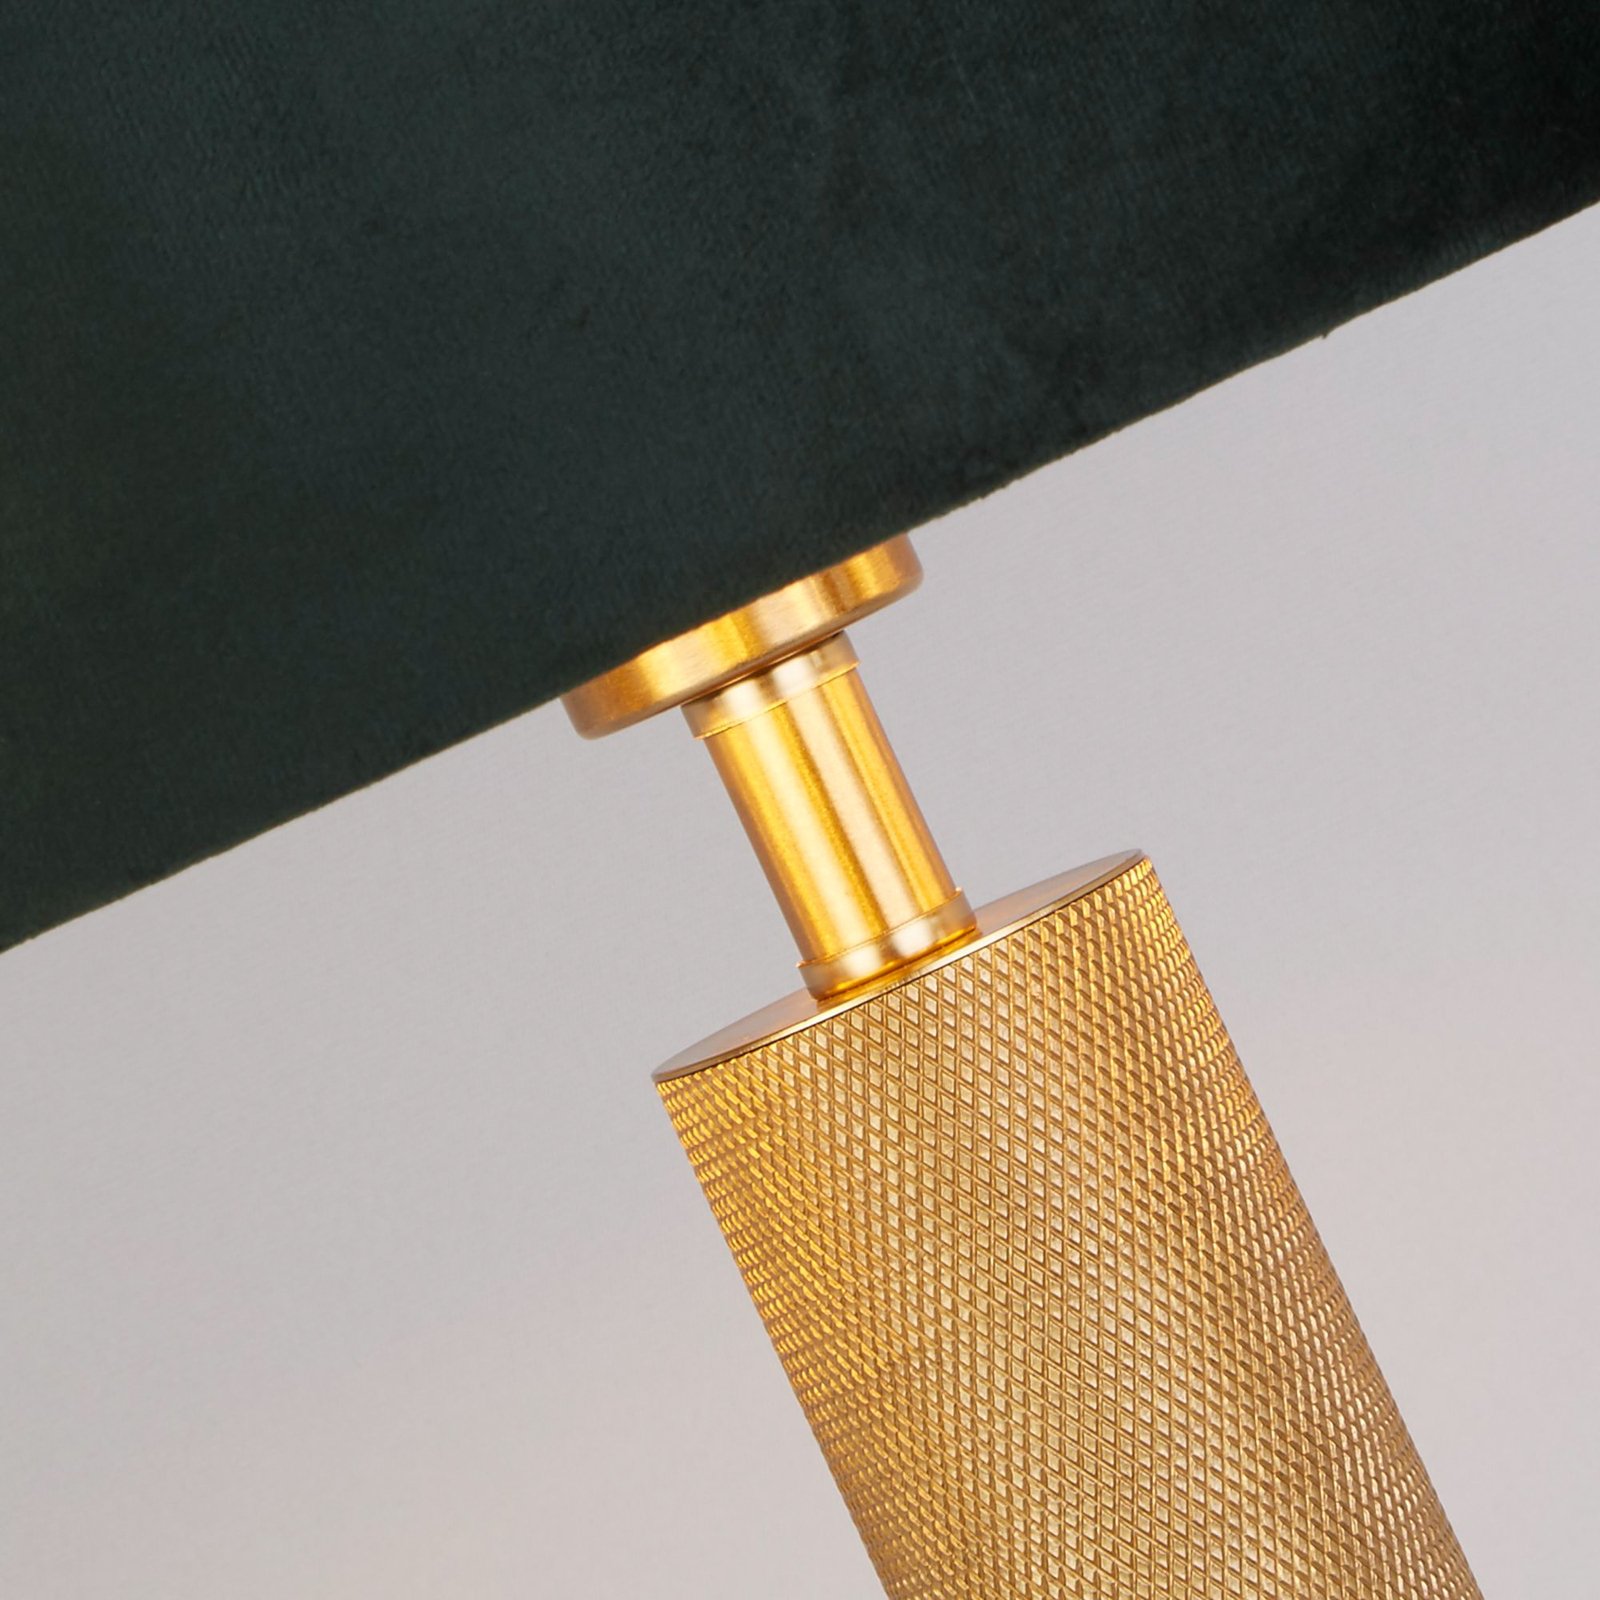 London table lamp, brass / green